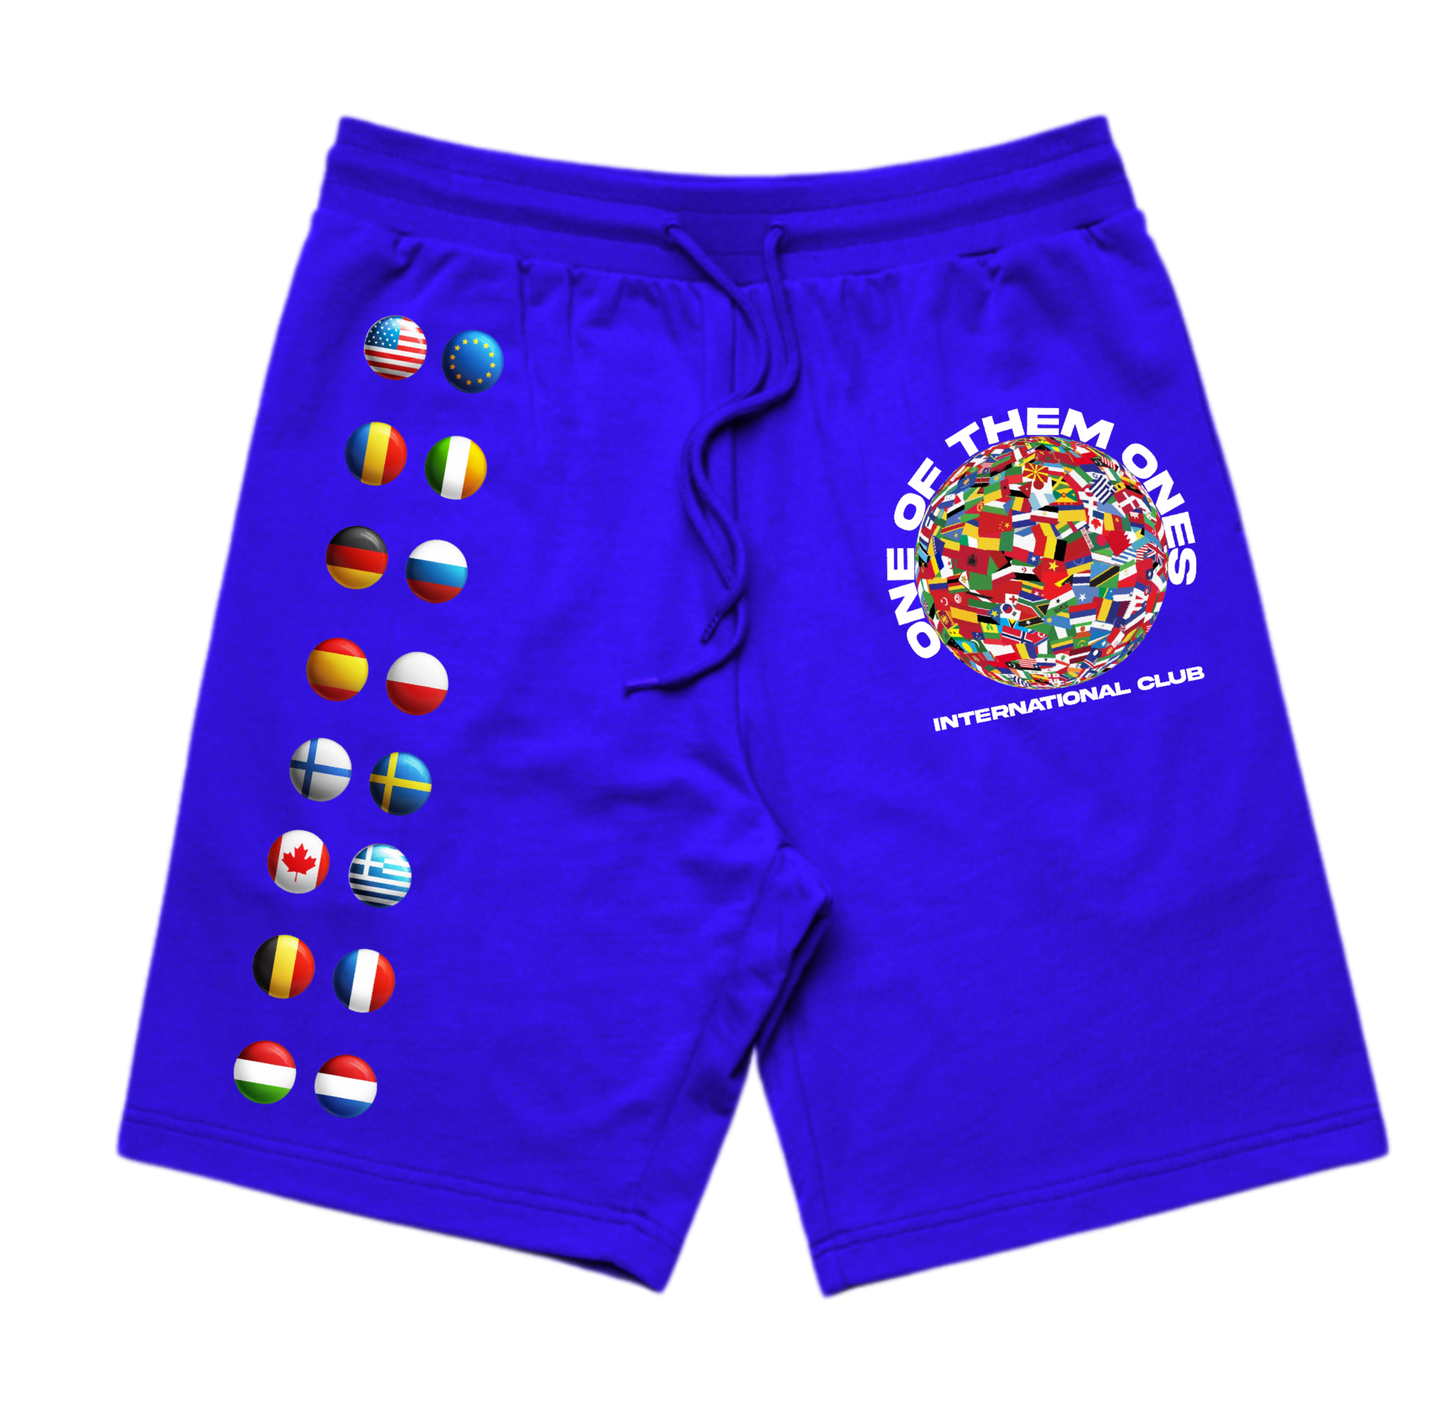 Organik Lyfestyle - 1OFTHEM1's International Club - Blue Shorts